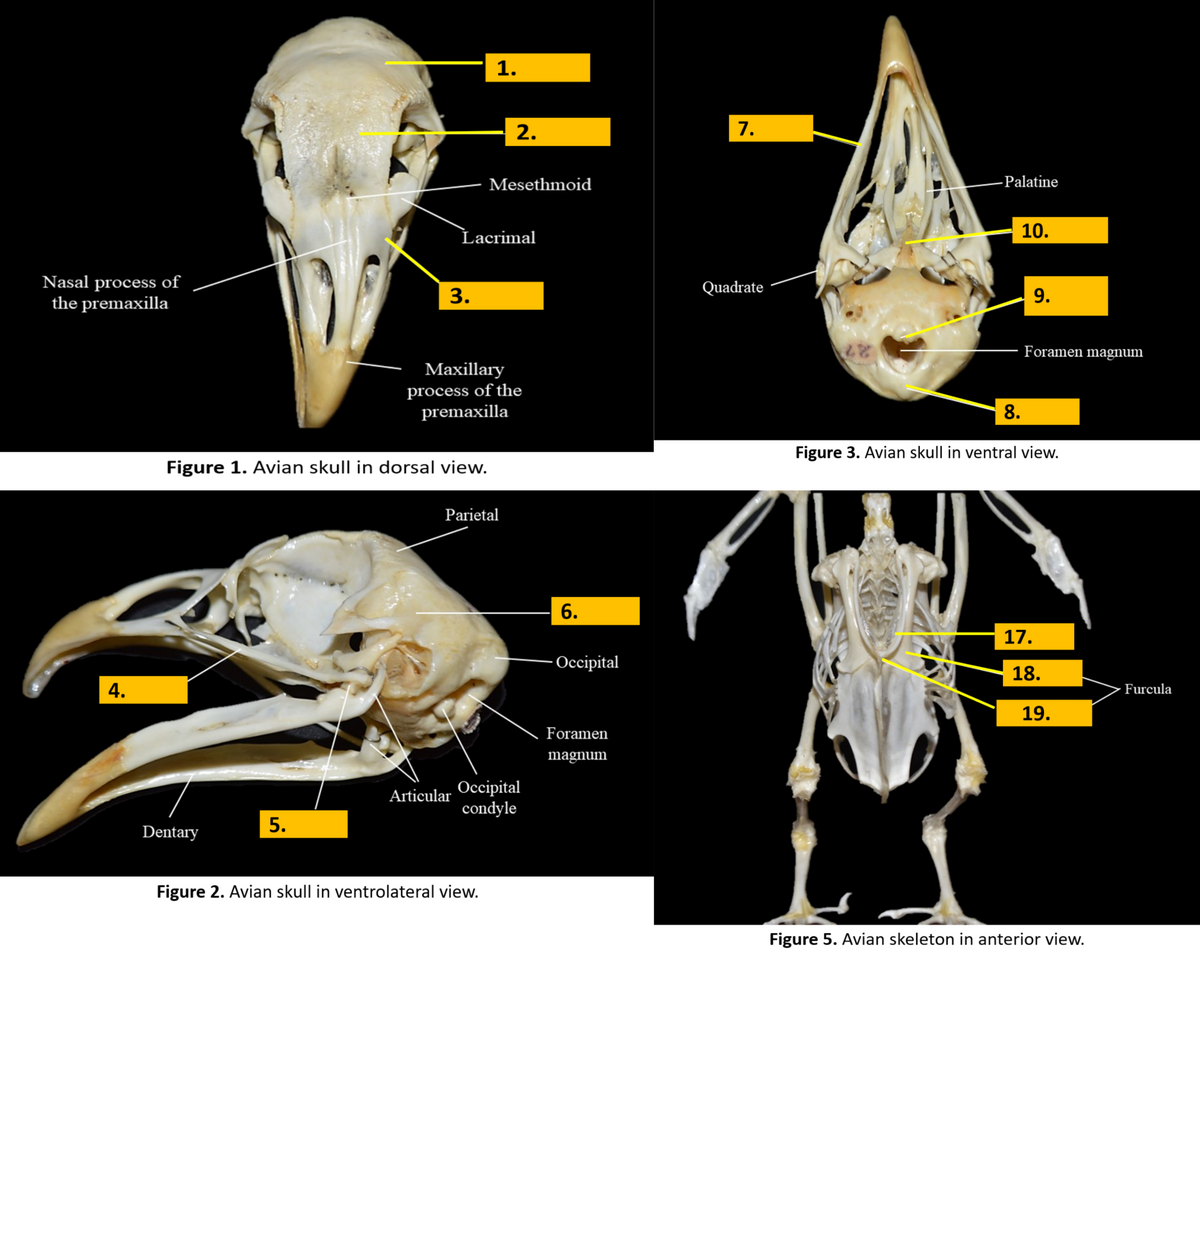 1.
2.
7.
Mesethmoid
-Palatine
Lacrimal
10.
Nasal process of
the premaxilla
3.
Quadrate
9.
Foramen magnum
Maxillary
process of the
premaxilla
8.
Figure 3. Avian skull in ventral view.
Figure 1. Avian skull in dorsal view.
Parietal
6.
17.
Оссірpital
18.
4.
Furcula
19.
Foramen
magnum
Articular Occipital
condyle
5.
Dentary
Figure 2. Avian skull in ventrolateral view.
Figure 5. Avian skeleton in anterior view.
